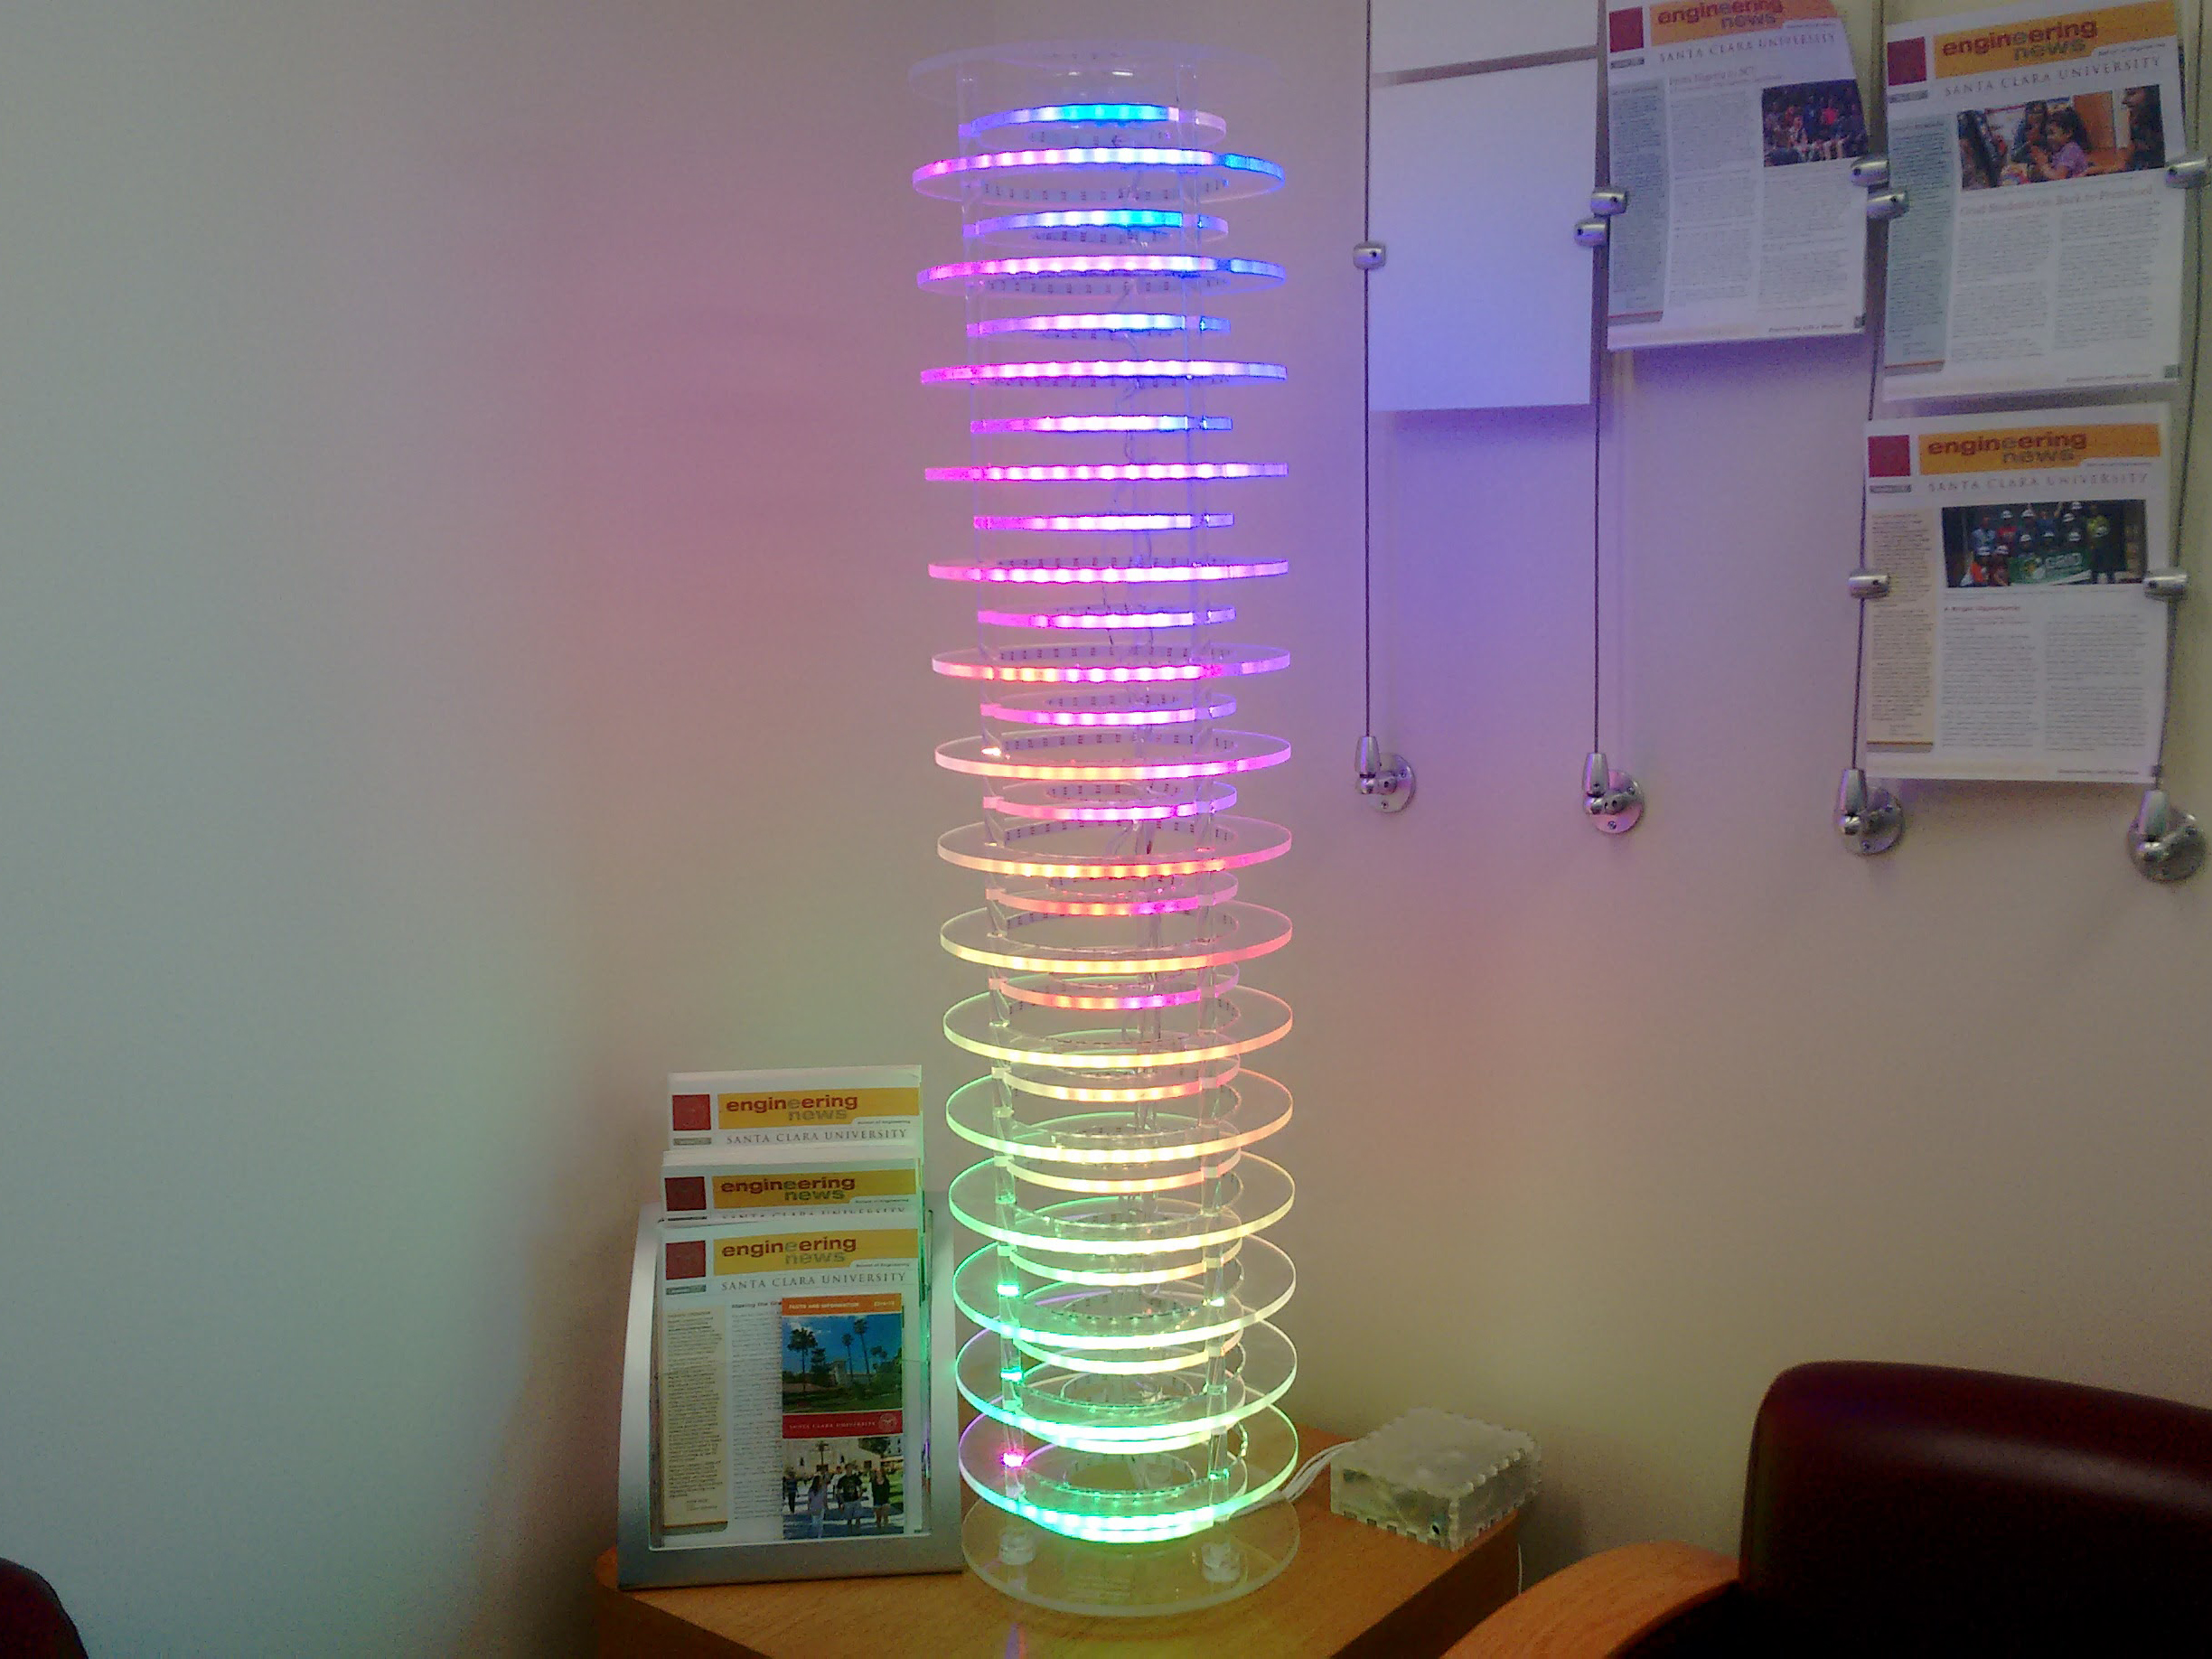 LED art piece made by KEEN Engineering Art Challenge winners